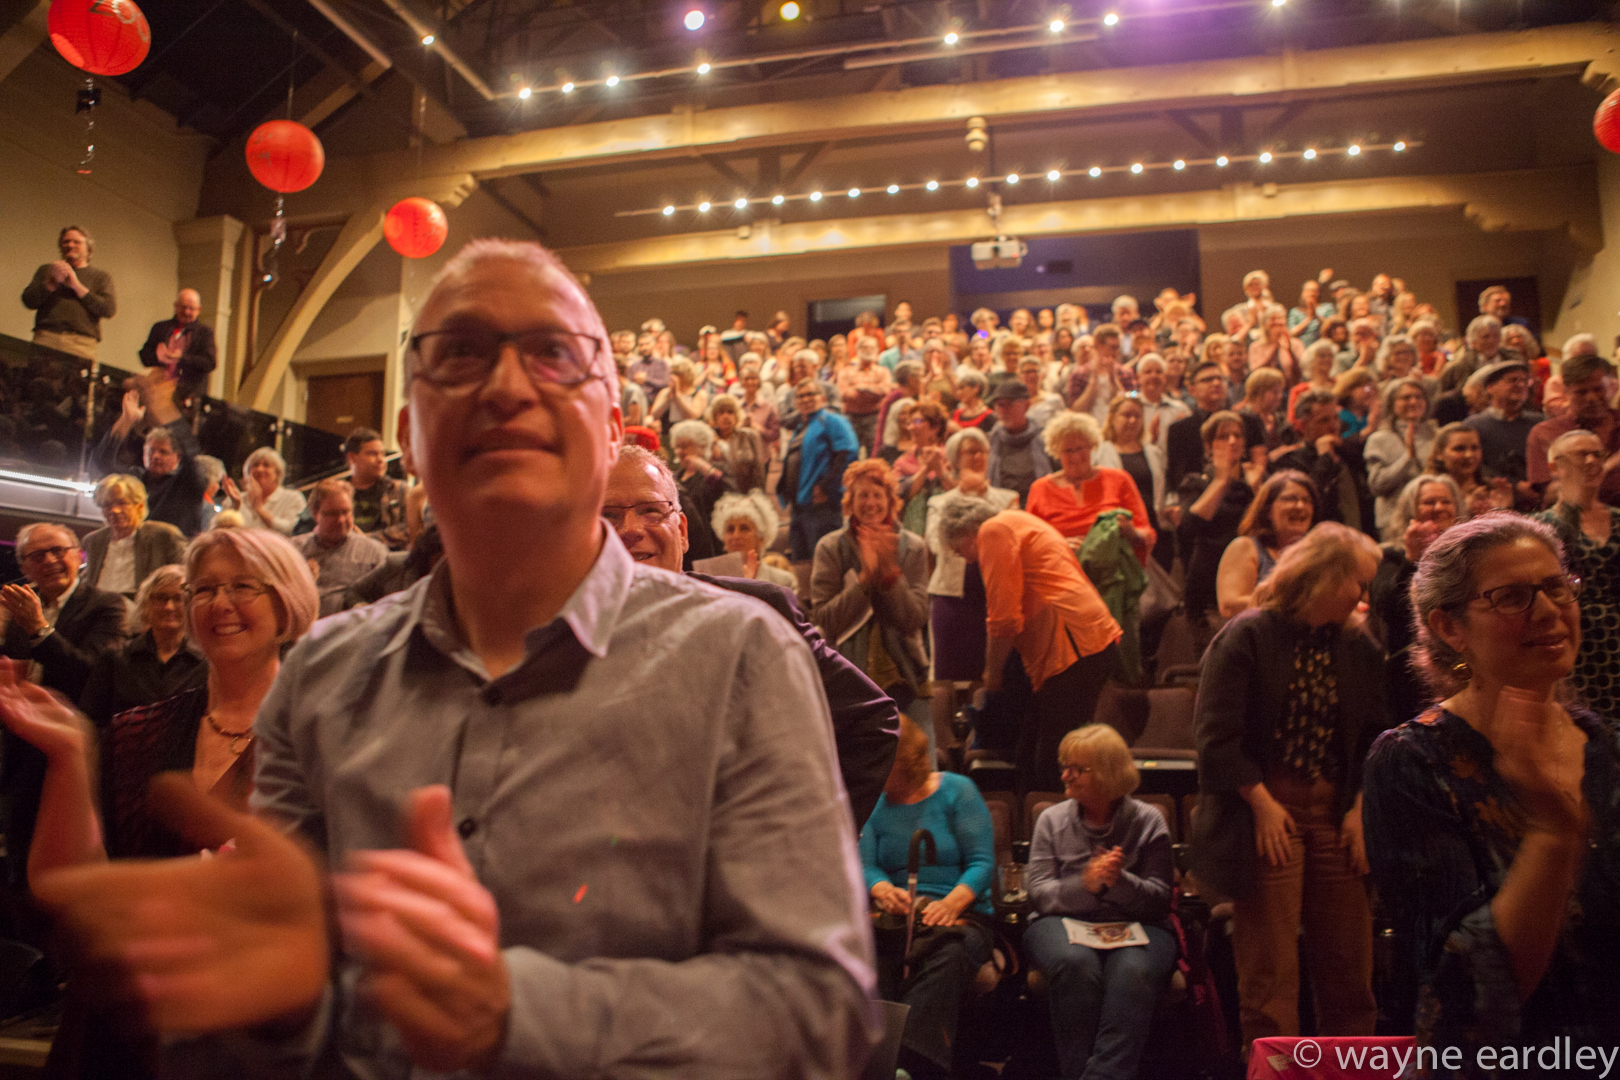 An audience applauds. Photo credit to Wayne Eardley